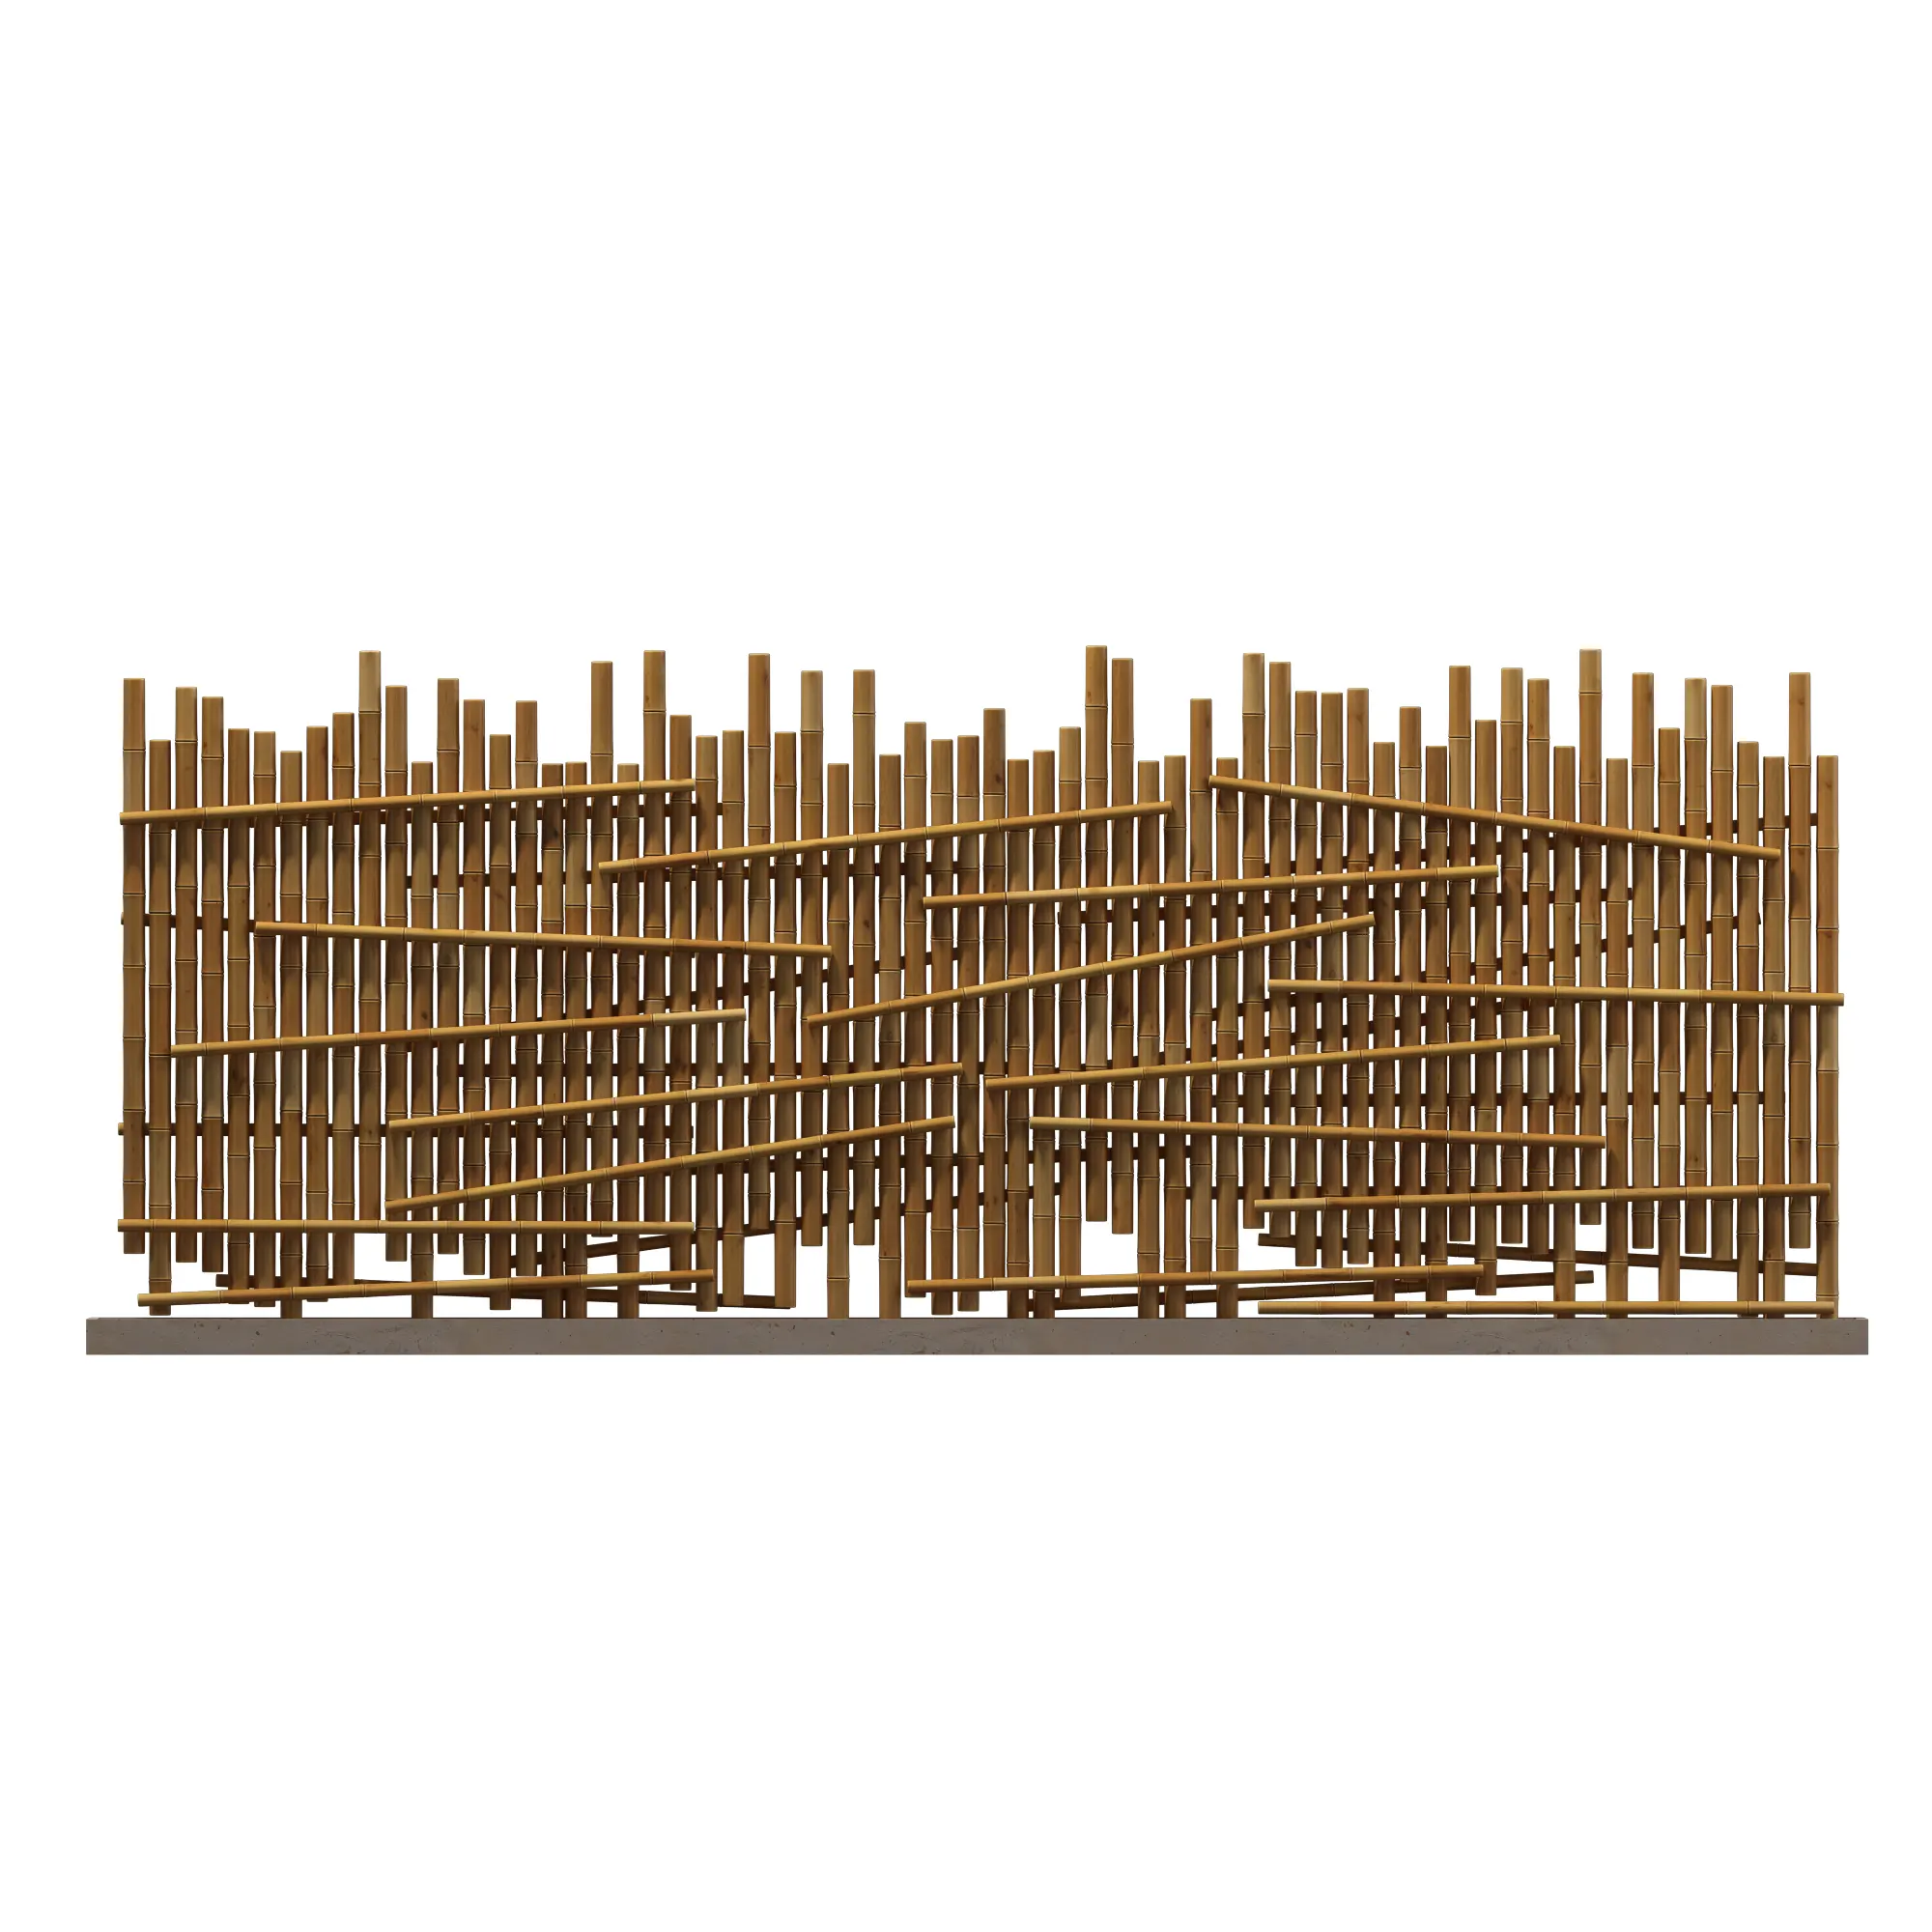 Bamboo decor N14 3D model download on cg.market 3ds max, CoronaRender, V-Ray